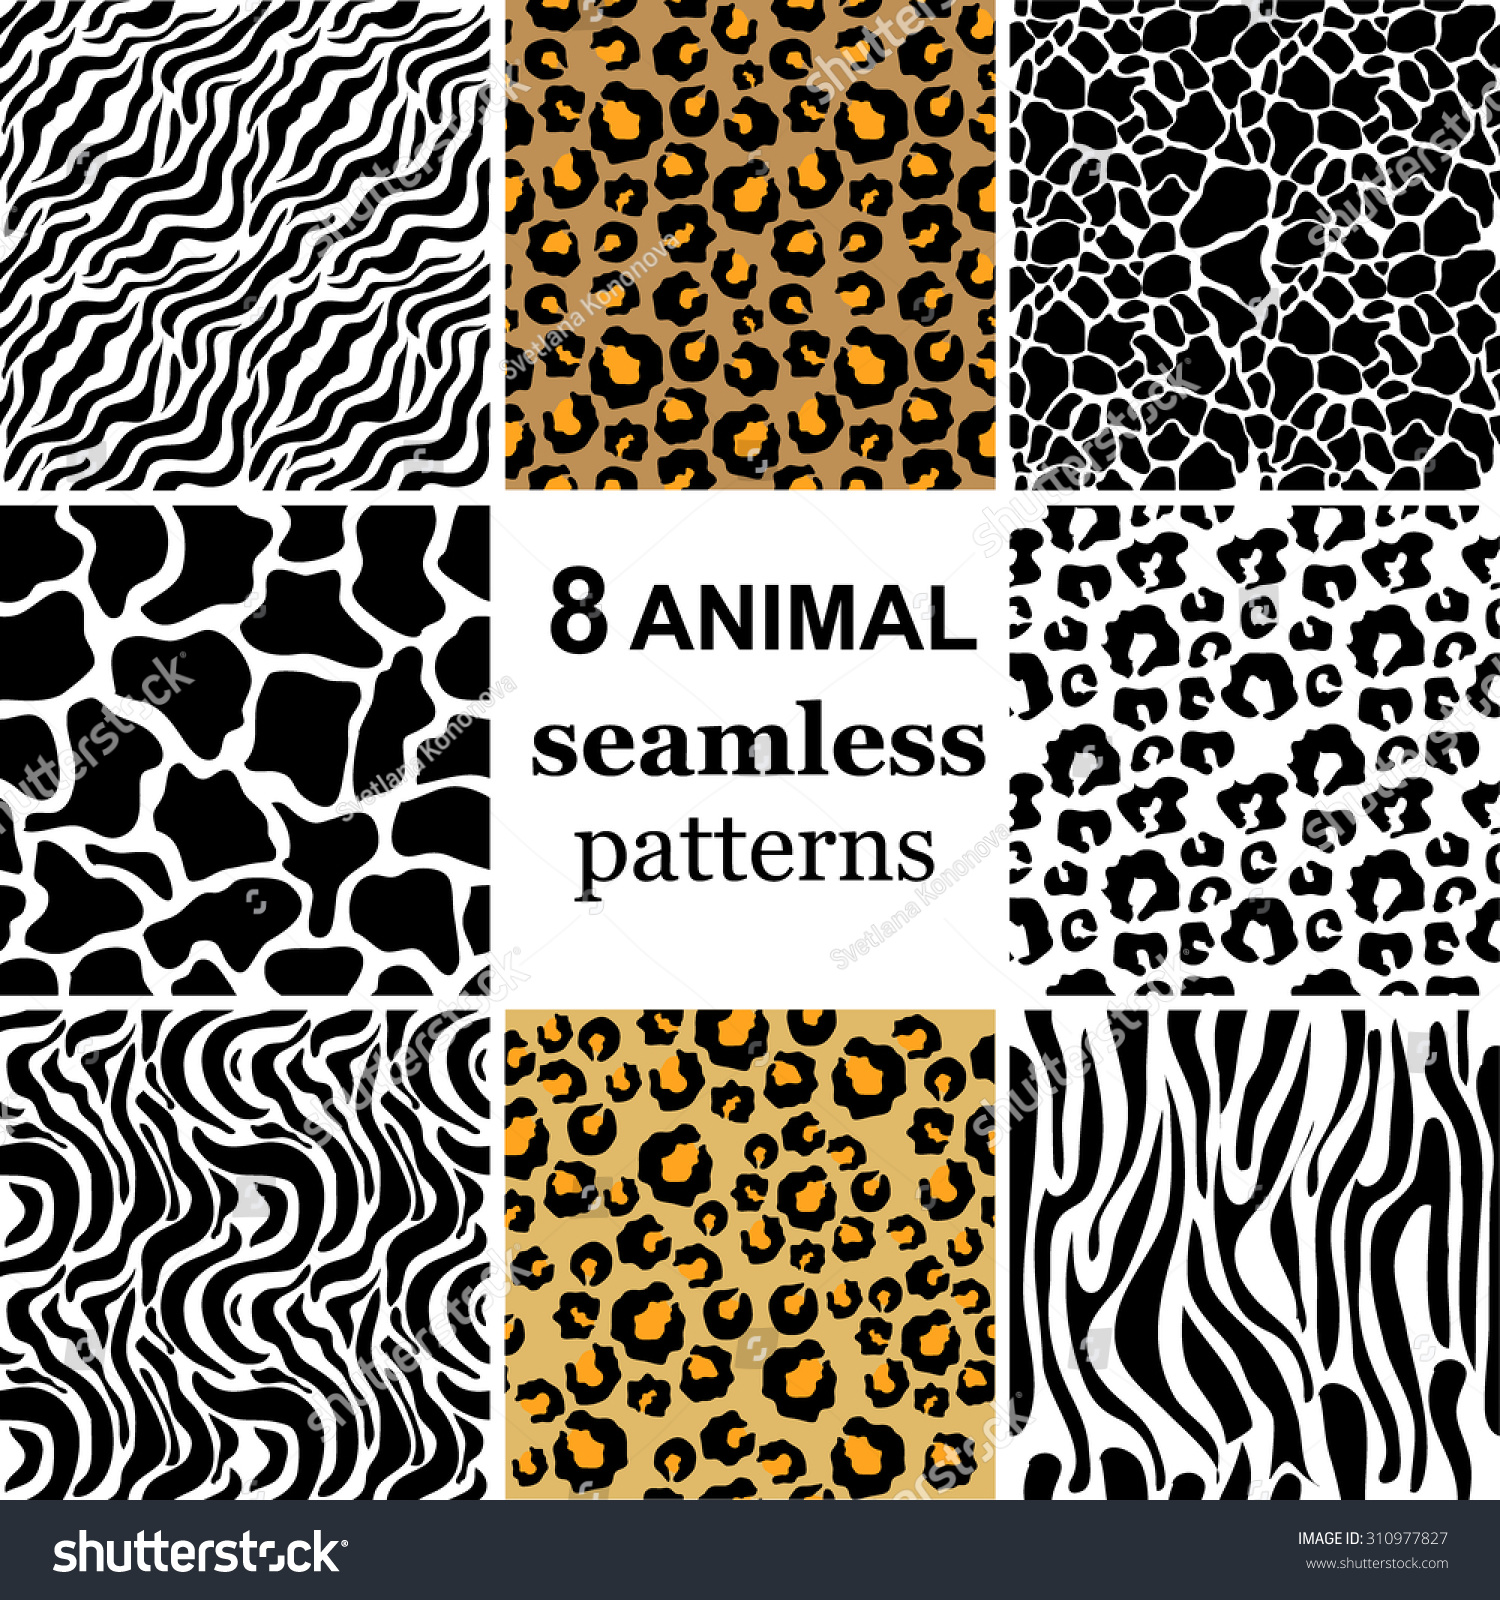 Set Of 8 Seamless Animal Patterns. Zebra, Leopard, Giraffe. Backgrounds ...